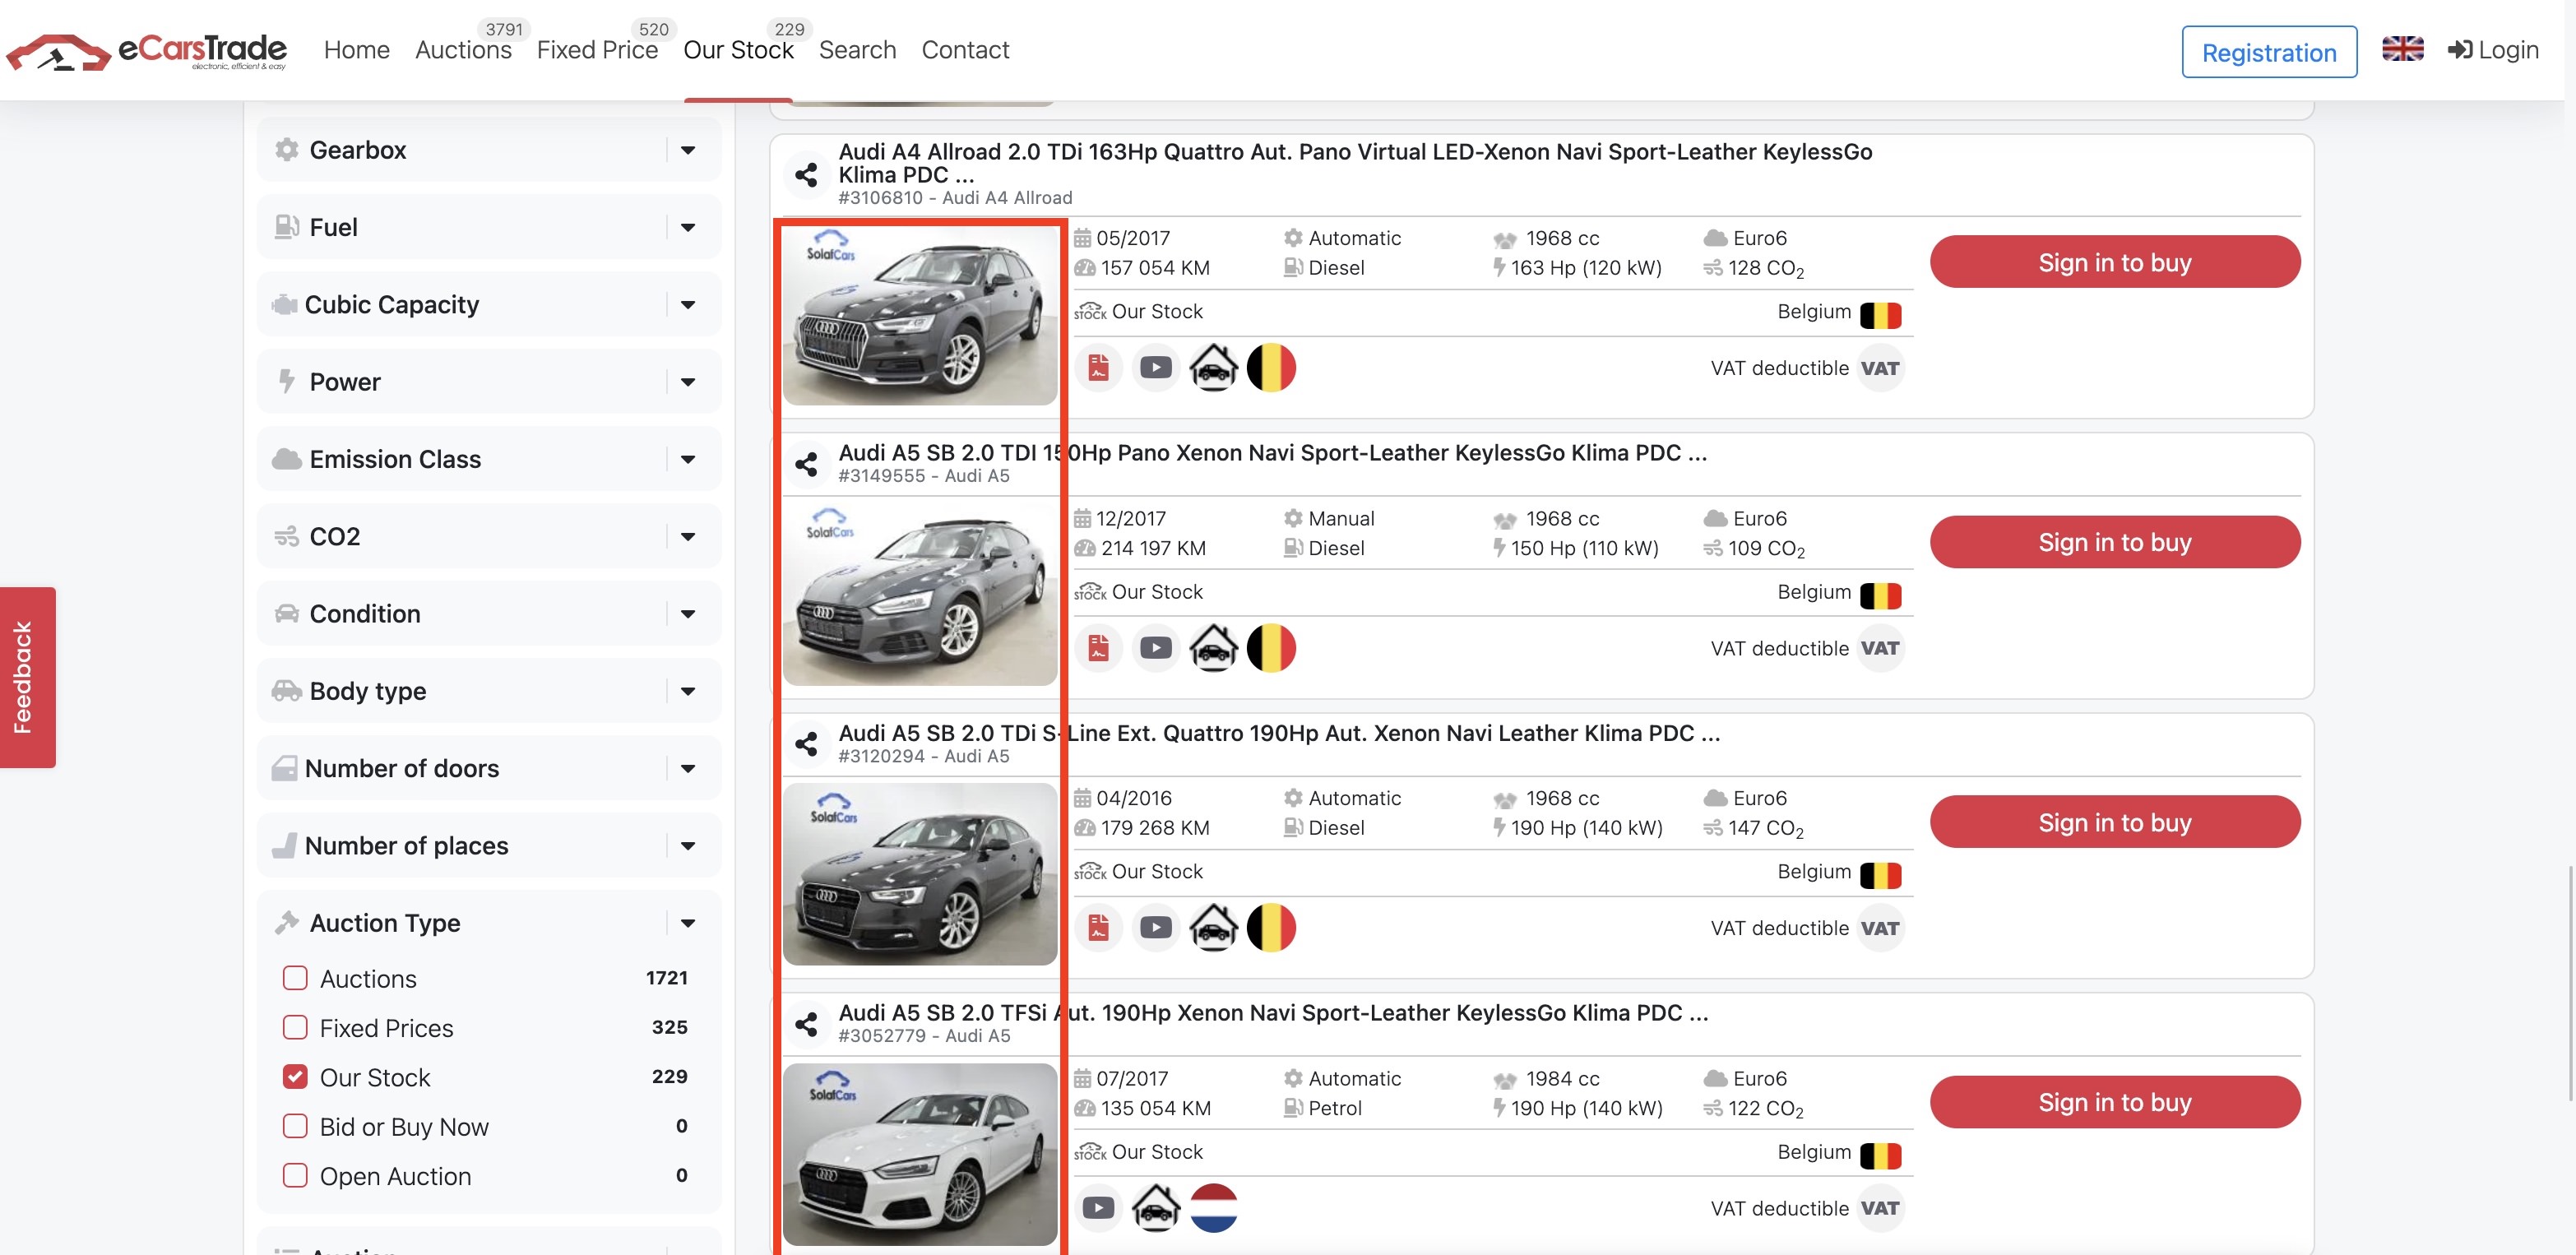 Captura de pantalla de la página web de eCarsTrade mostrando fotos de coches